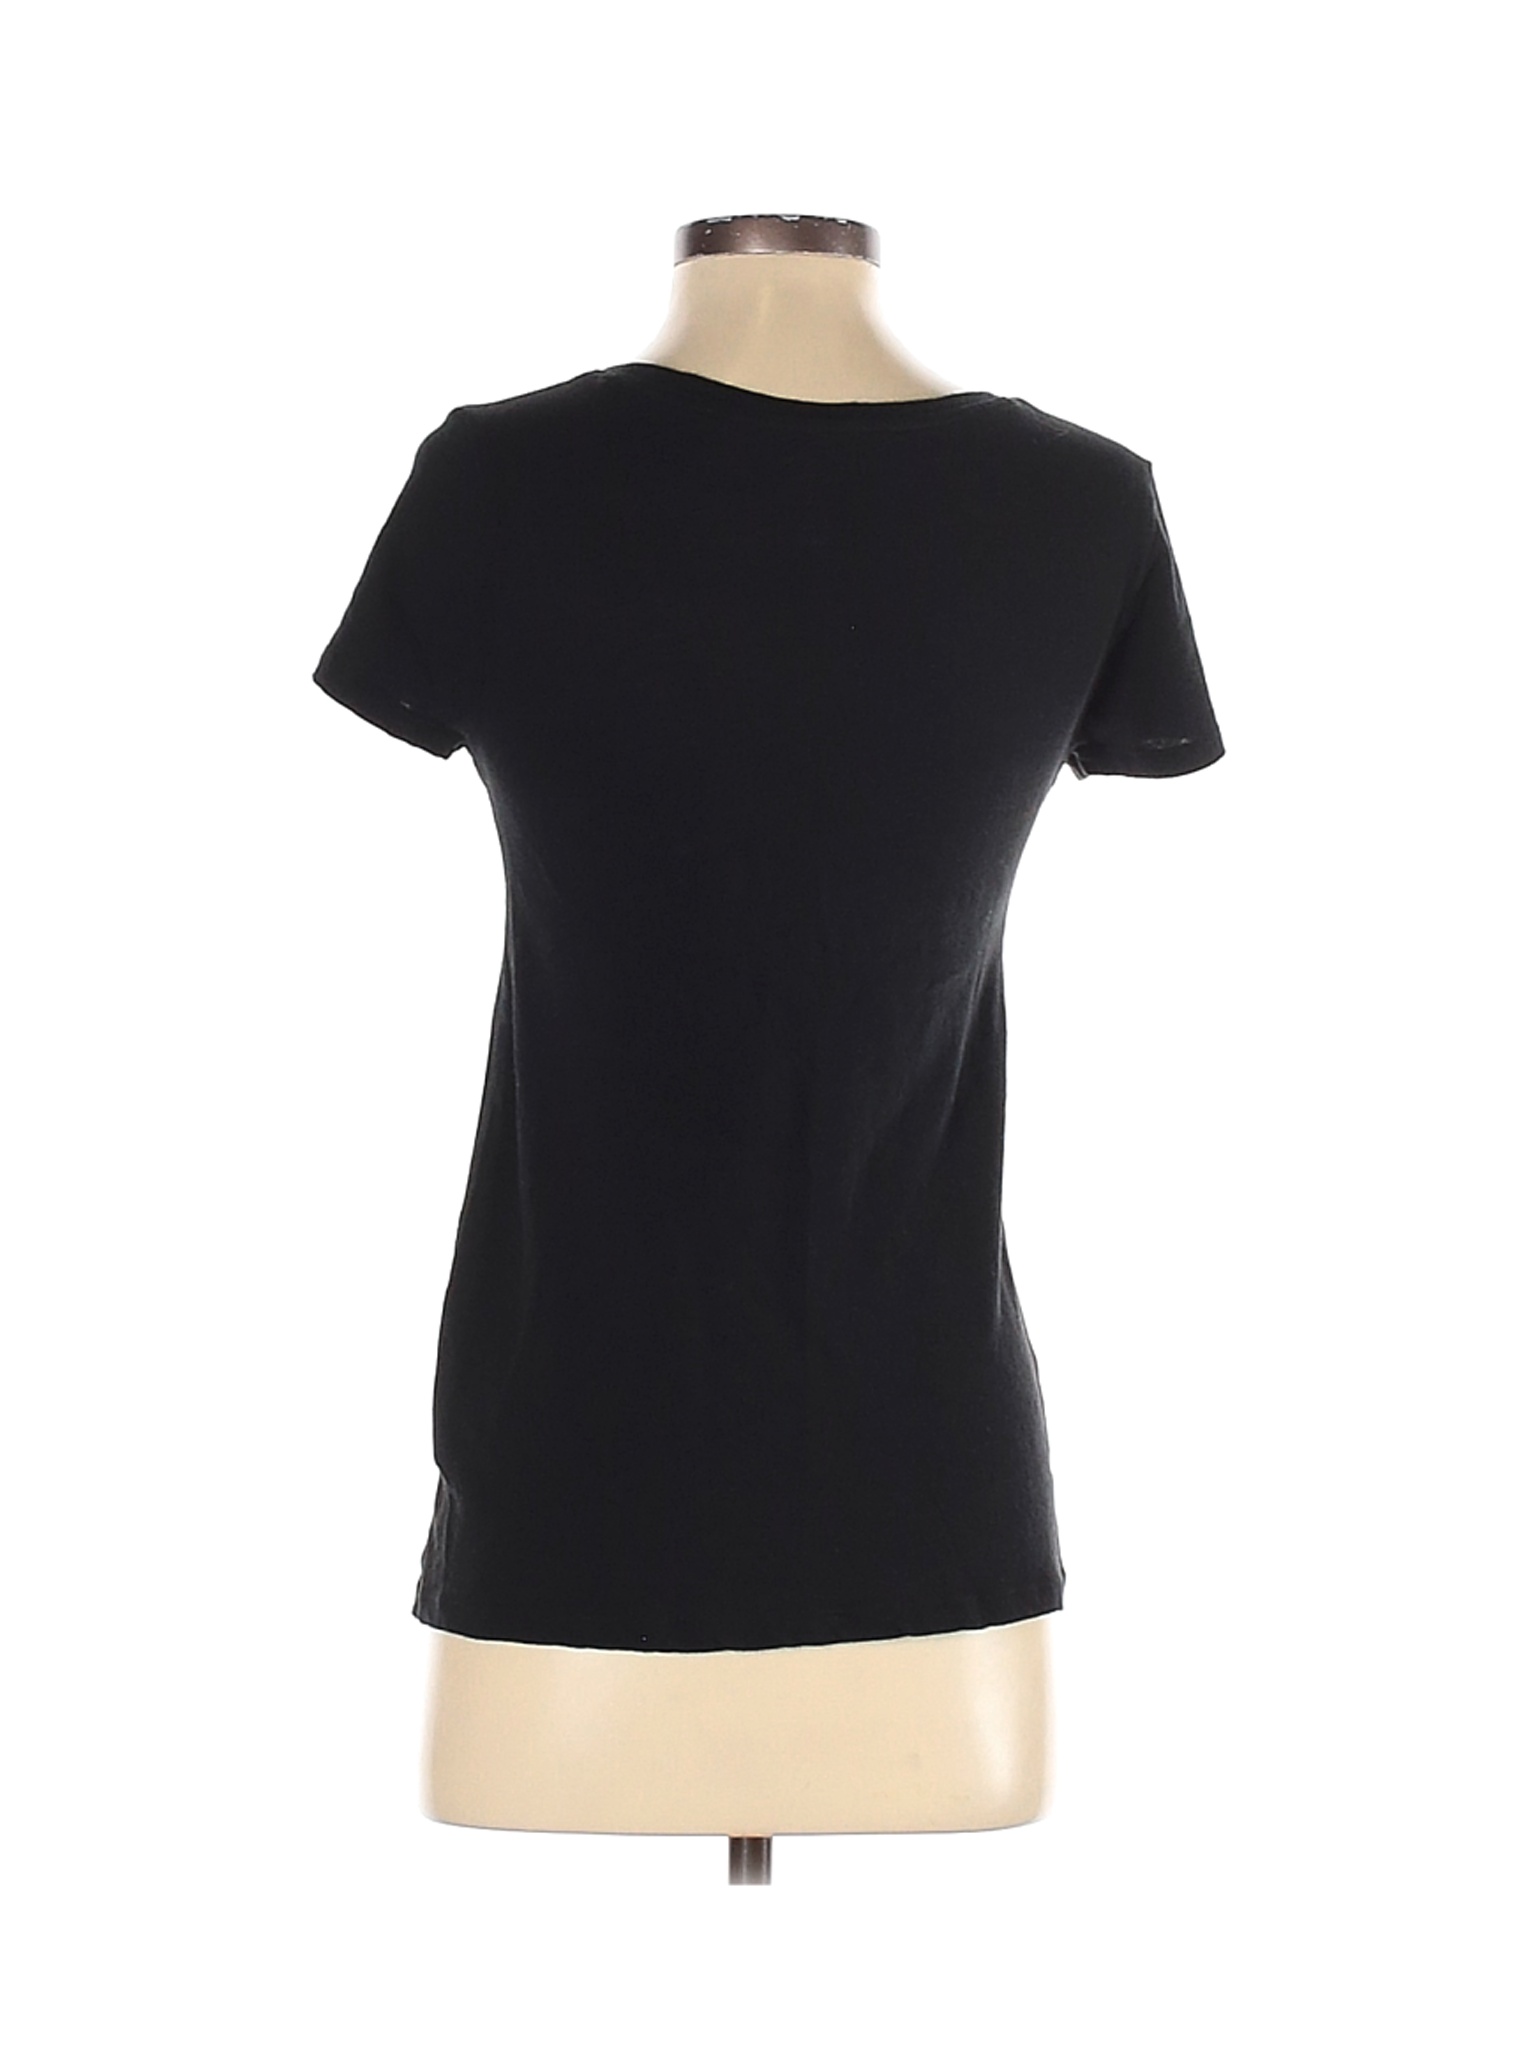 Gap Women Black Short Sleeve T-Shirt XS | eBay